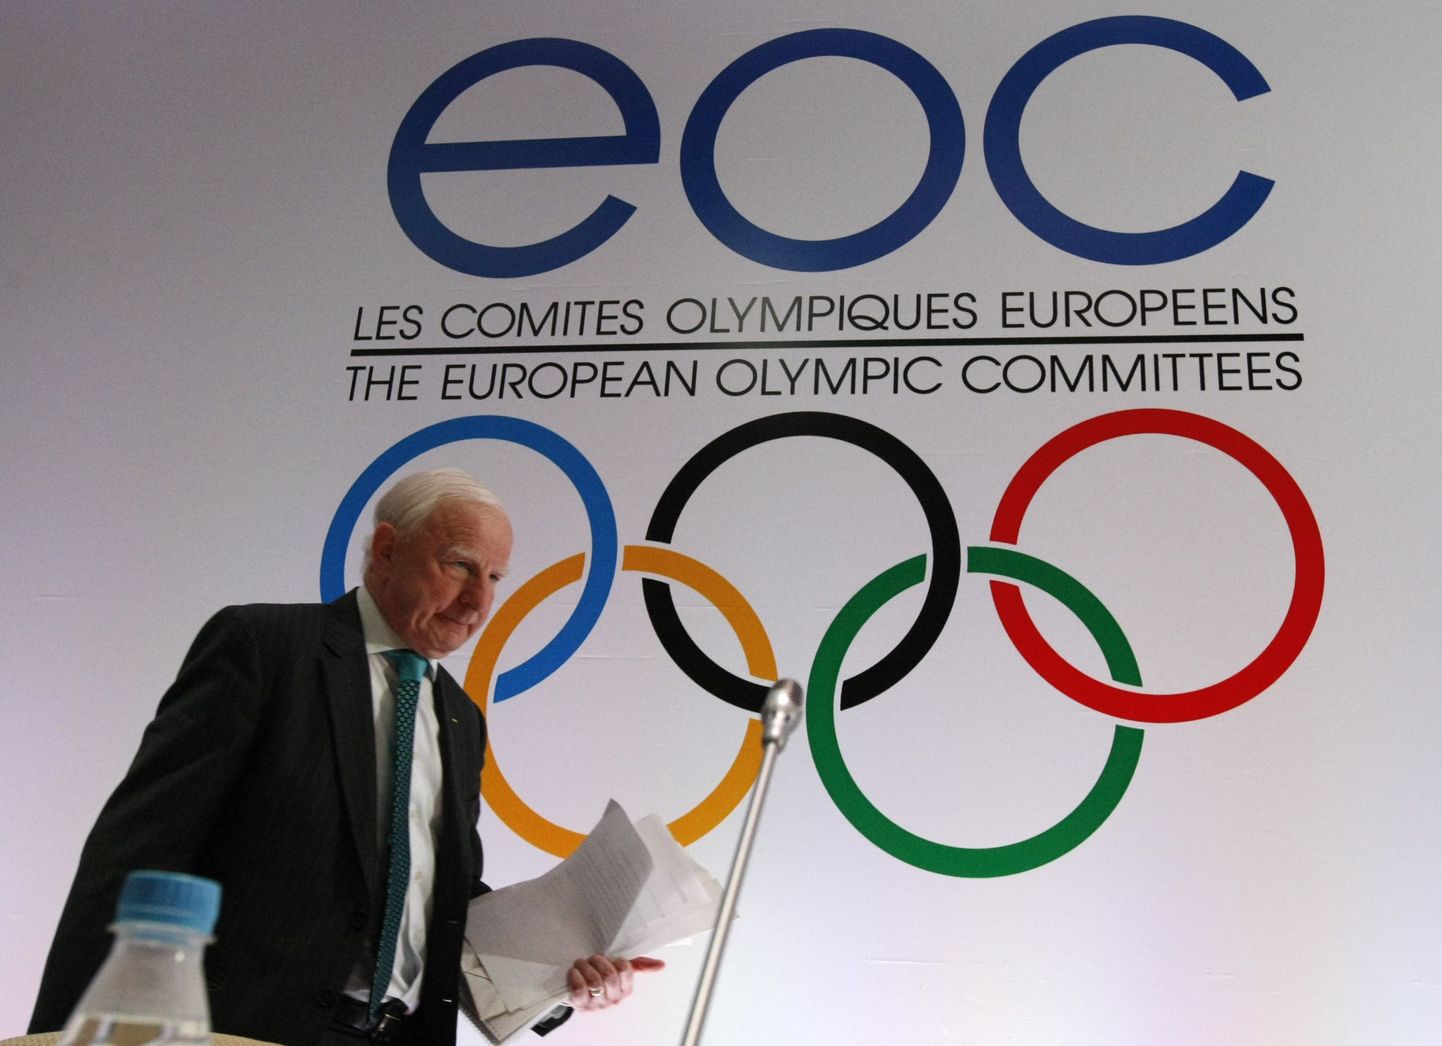 EOC logo.